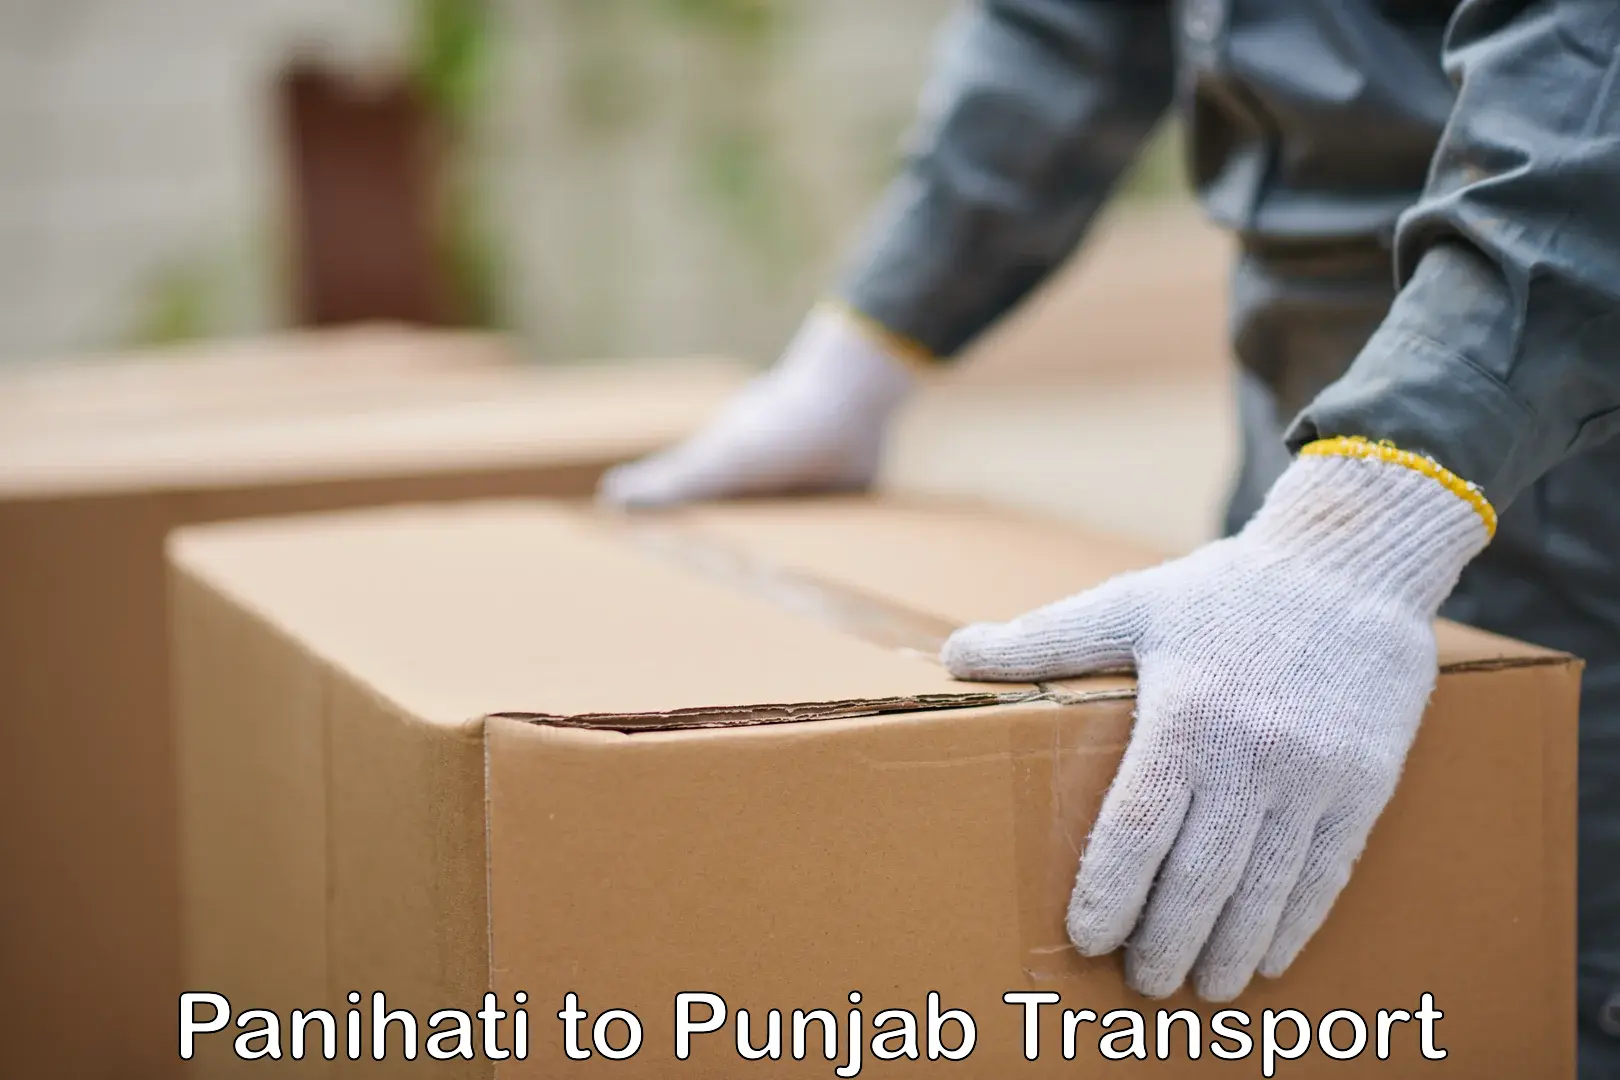 Sending bike to another city Panihati to Punjab